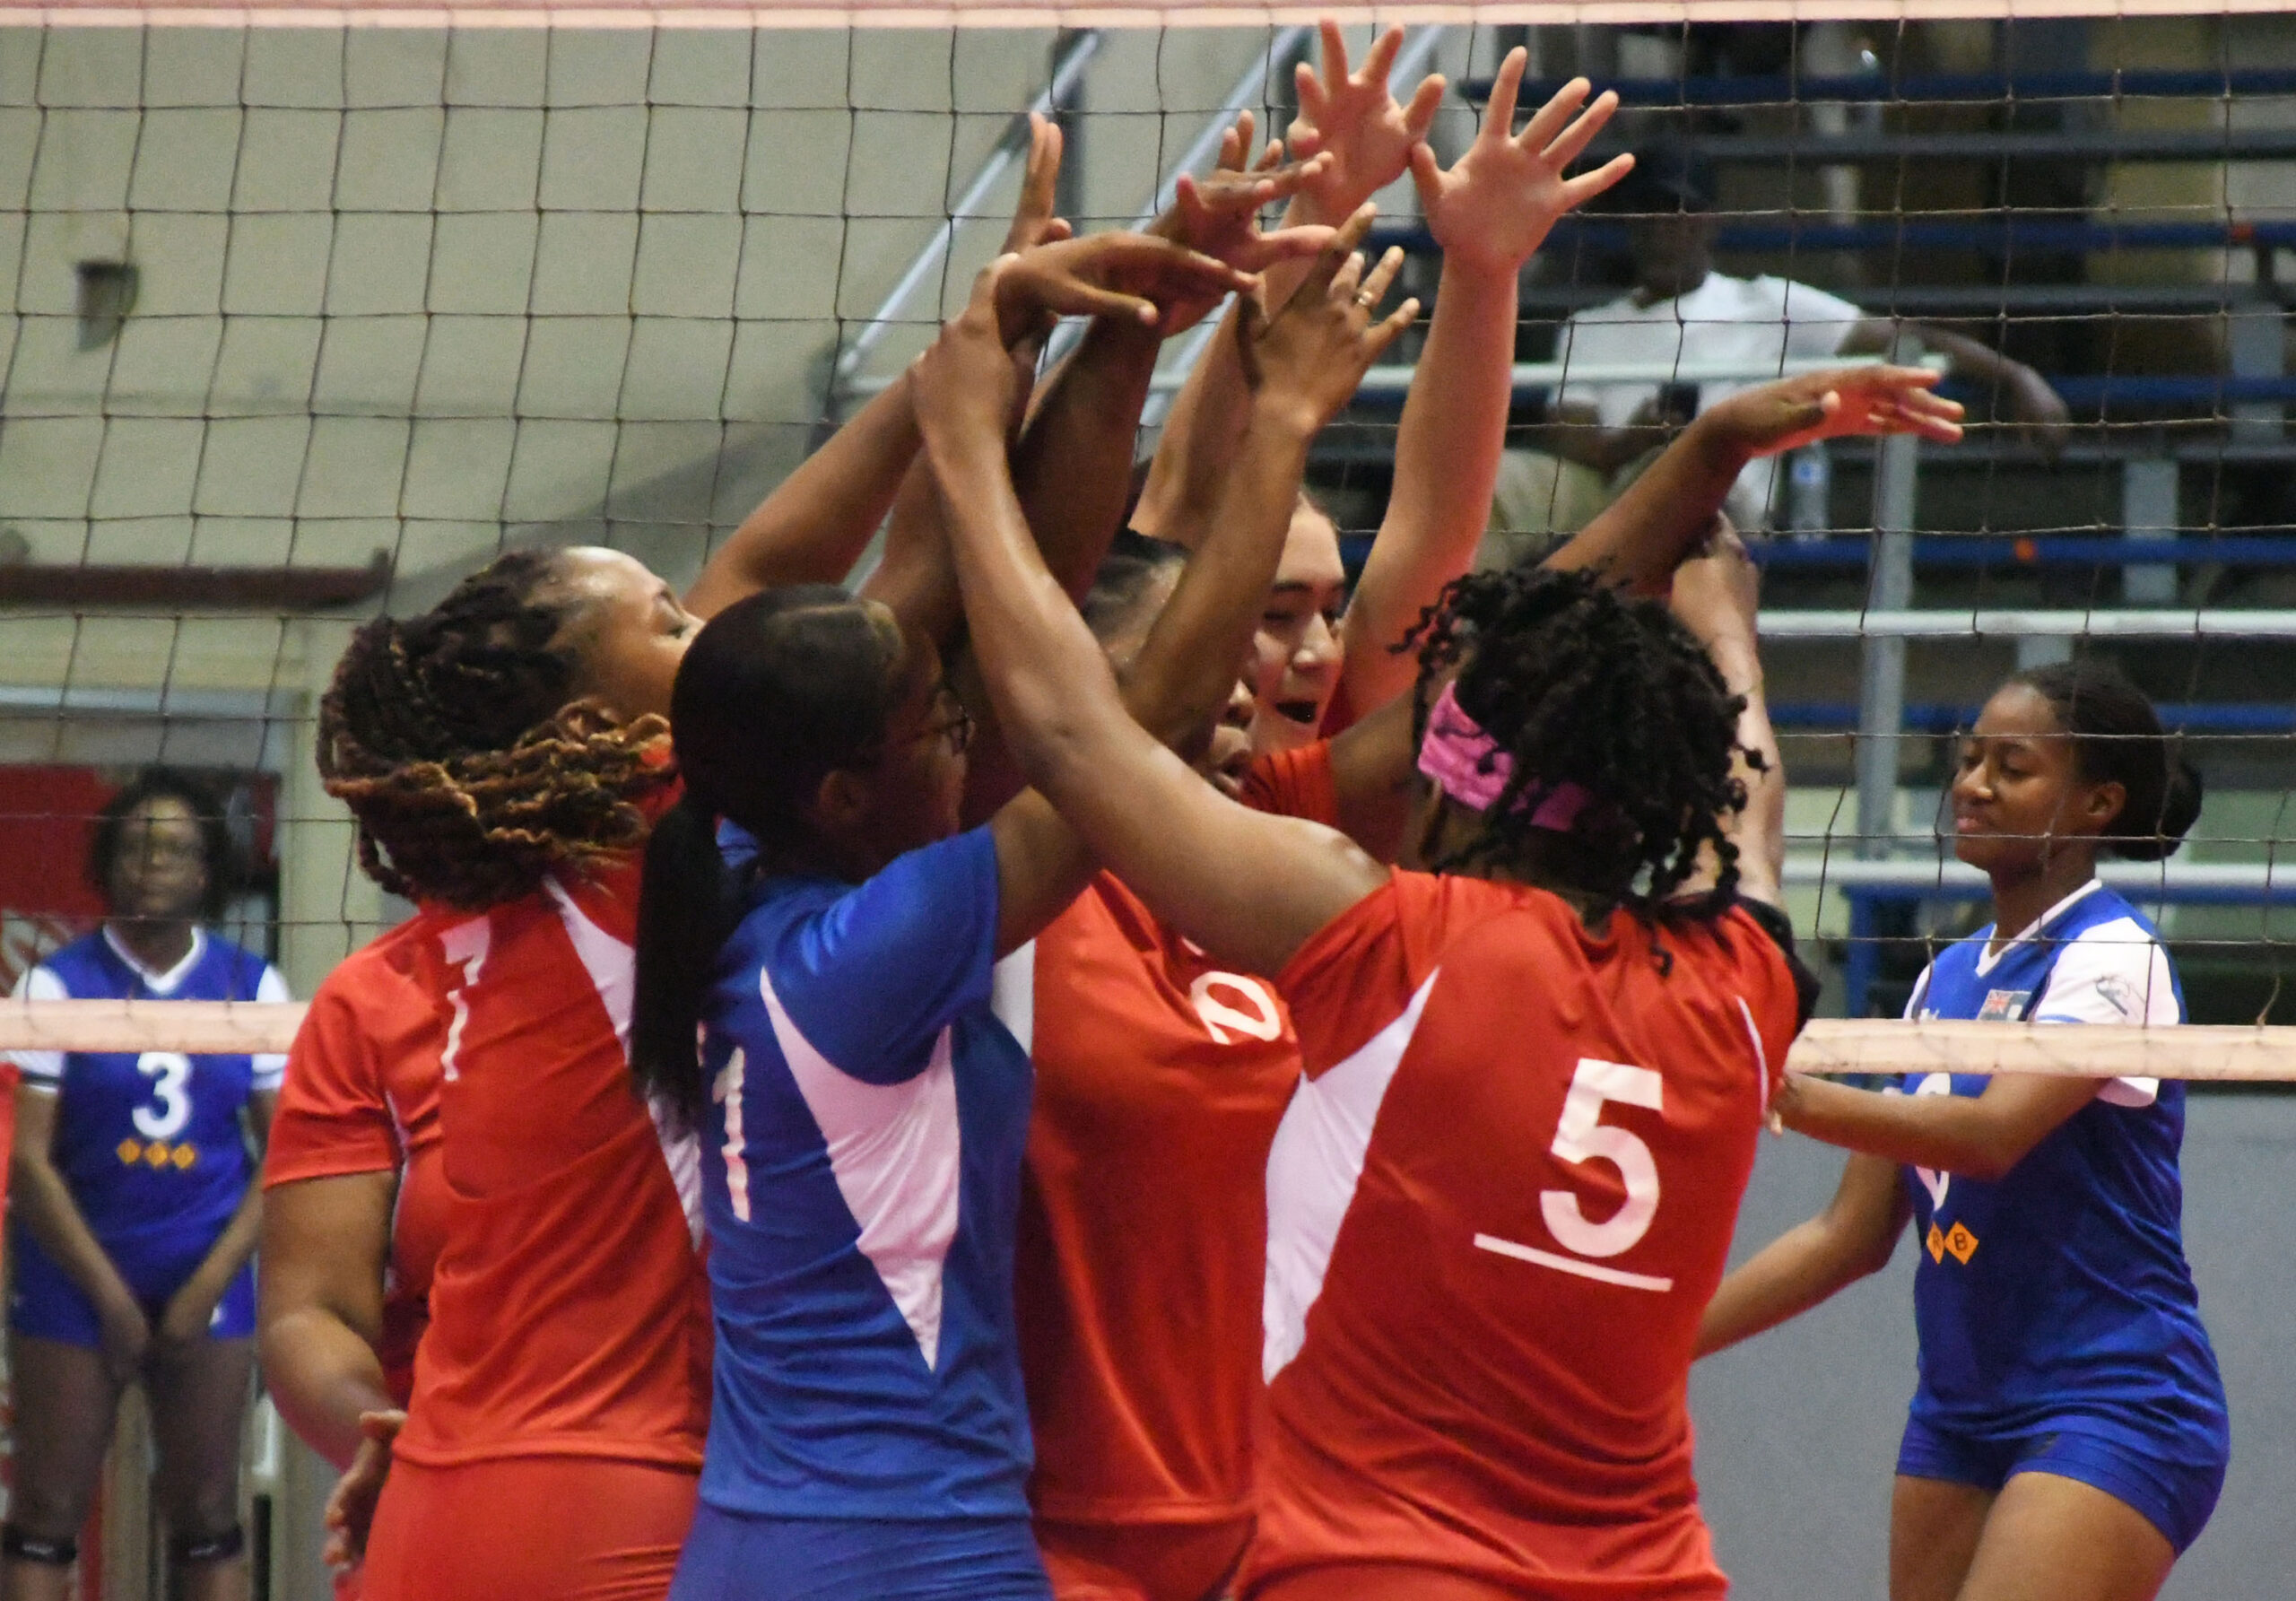 Home team St, Maarten edges Anguilla in five Sets